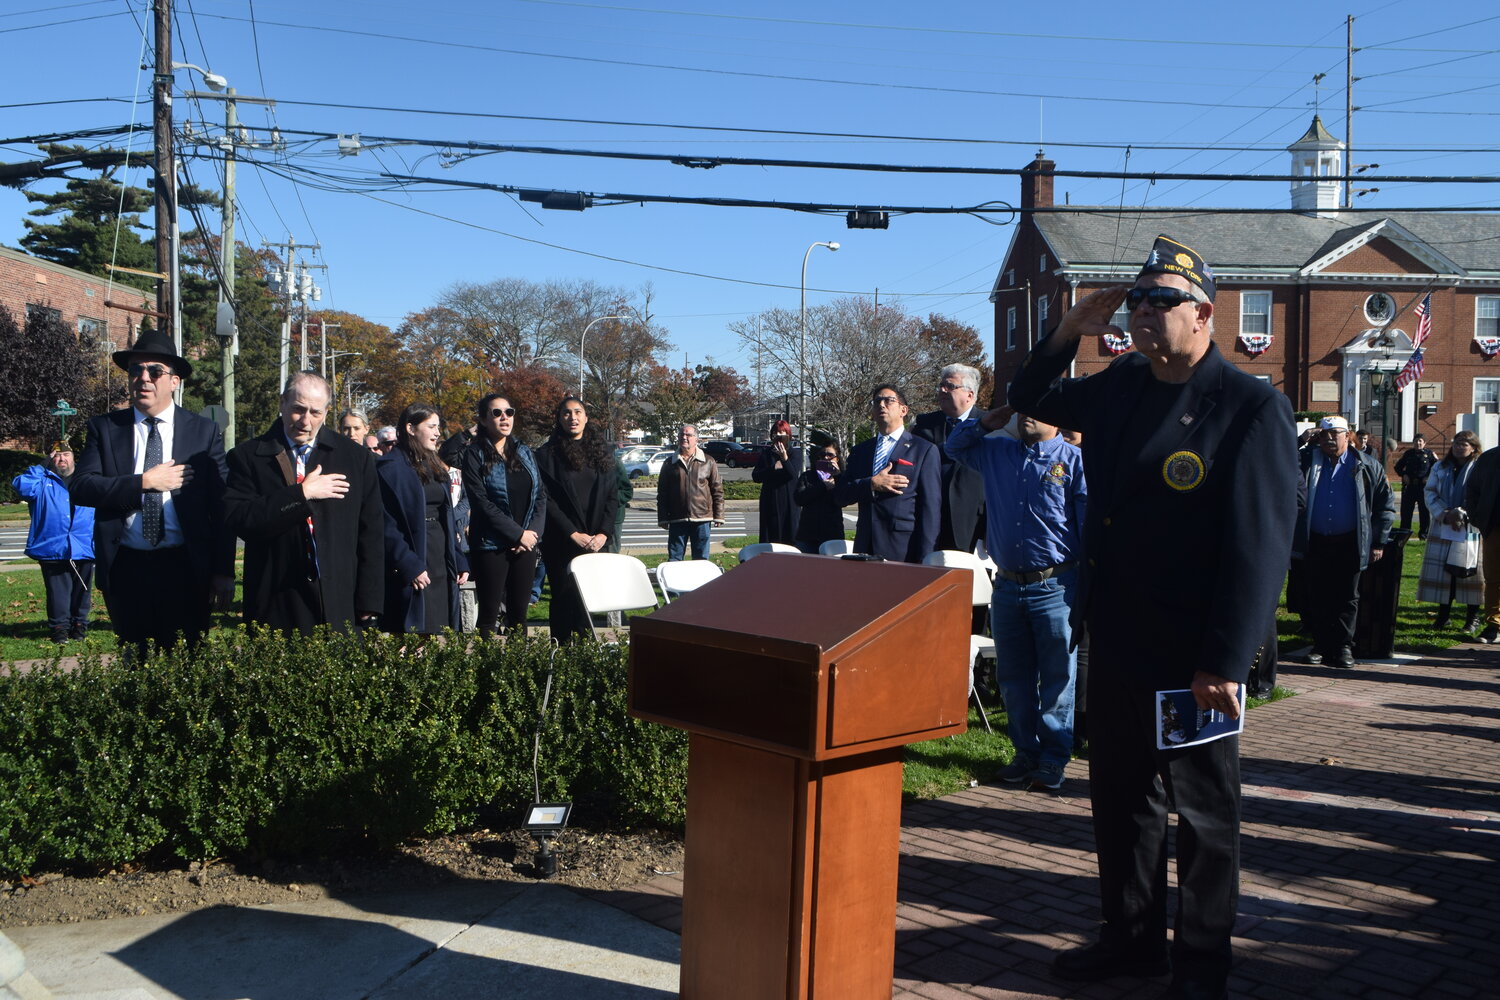 Veterans Day was commemorated in Andrew J. Parise Cedarhurst Park on Nov. 11.